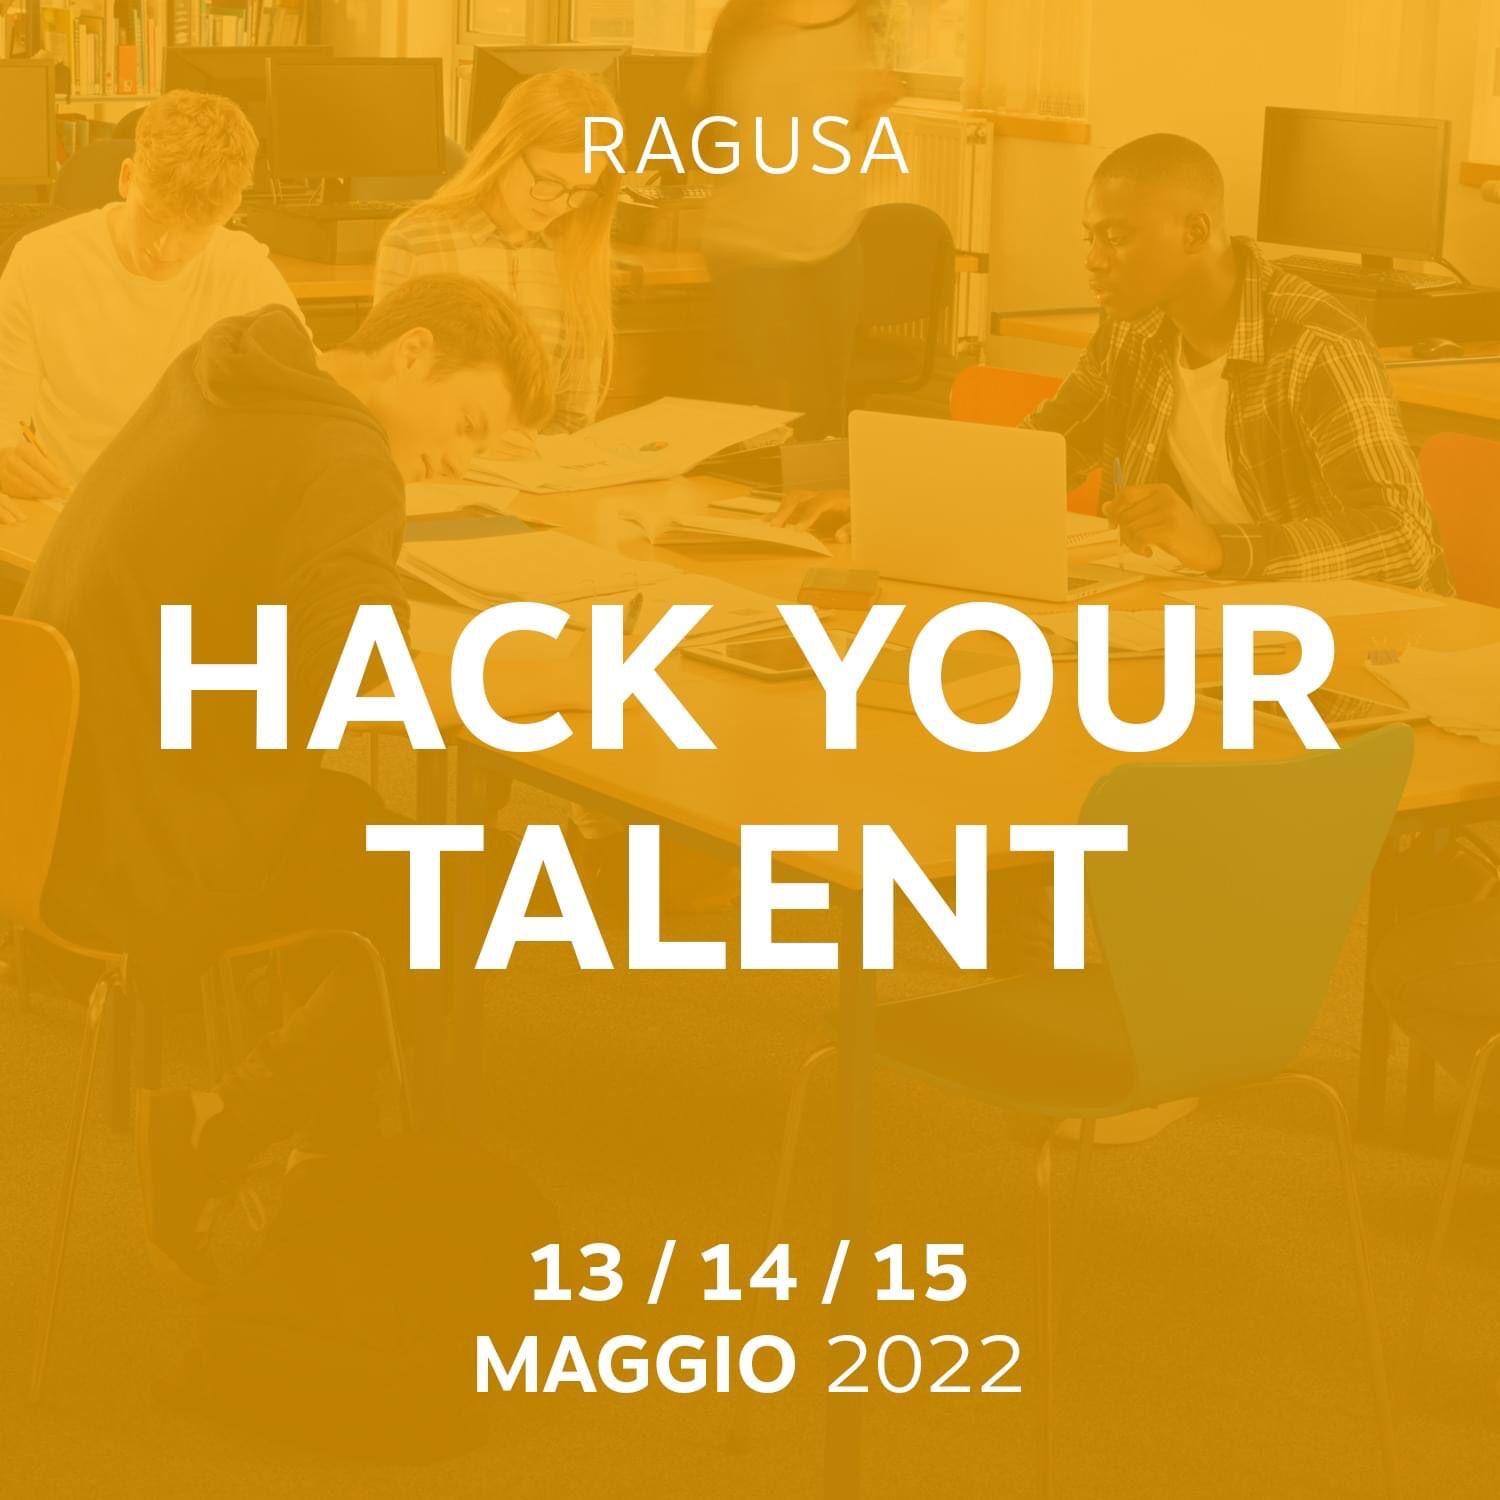 https://www.bapr.it/wp-content/uploads/Hack-Your-talent-Ragusa.jpeg